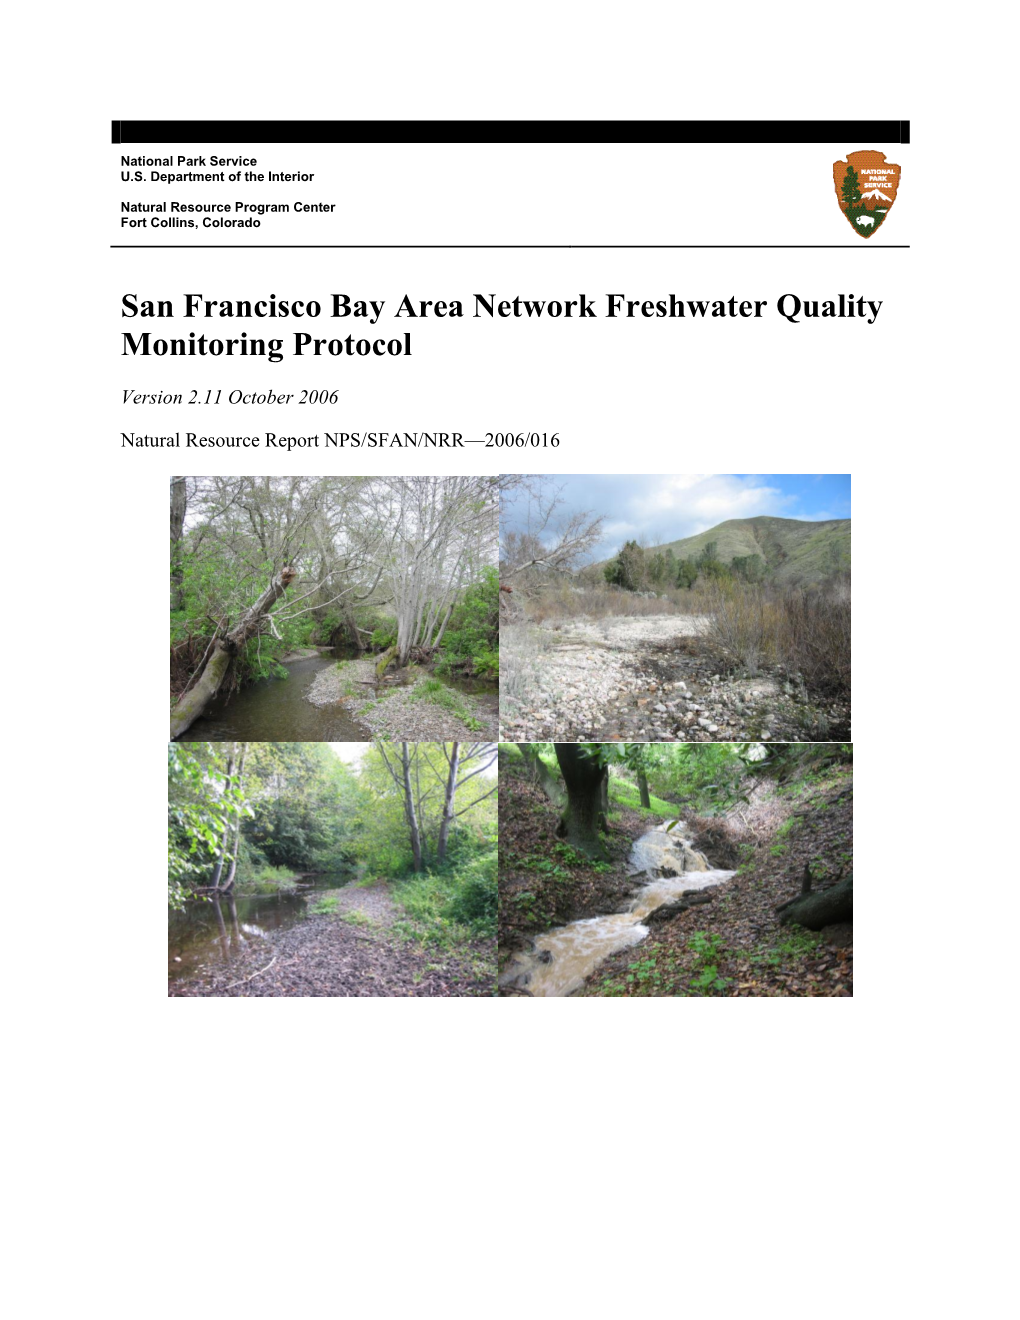 San Francisco Bay Area Network Freshwater Quality Monitoring Protocol